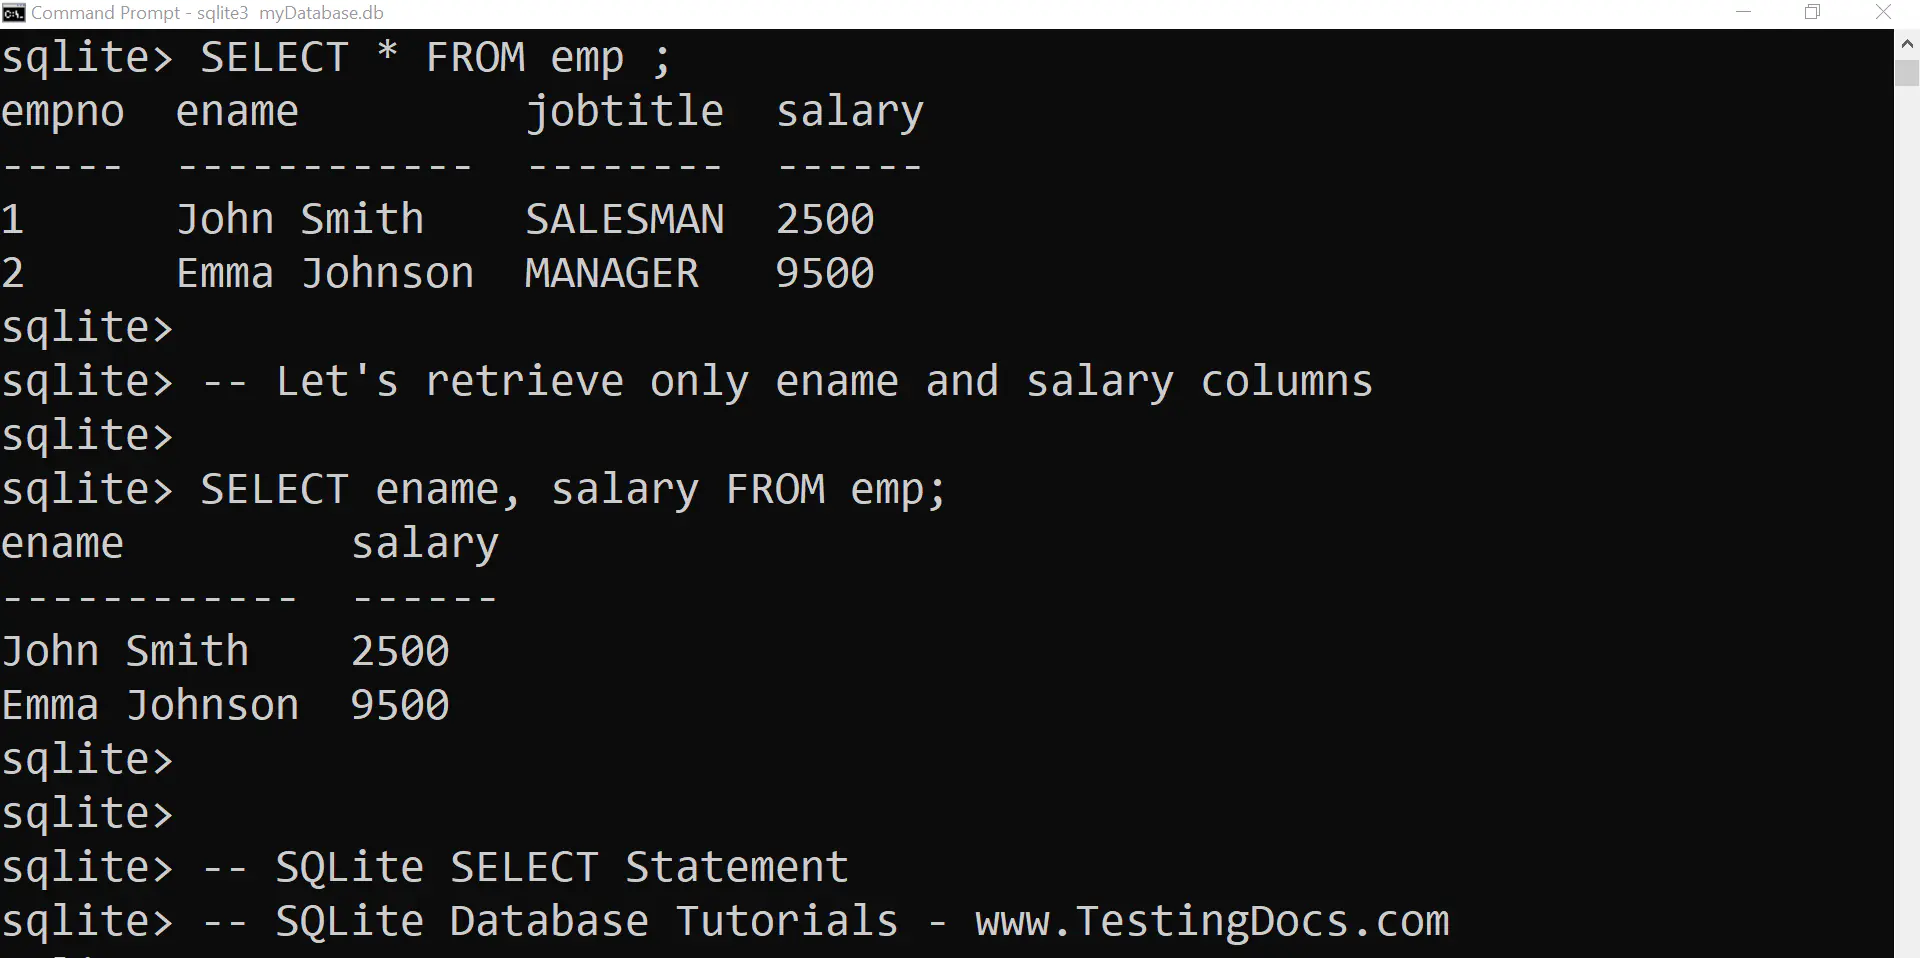 SQLite SELECT Statement